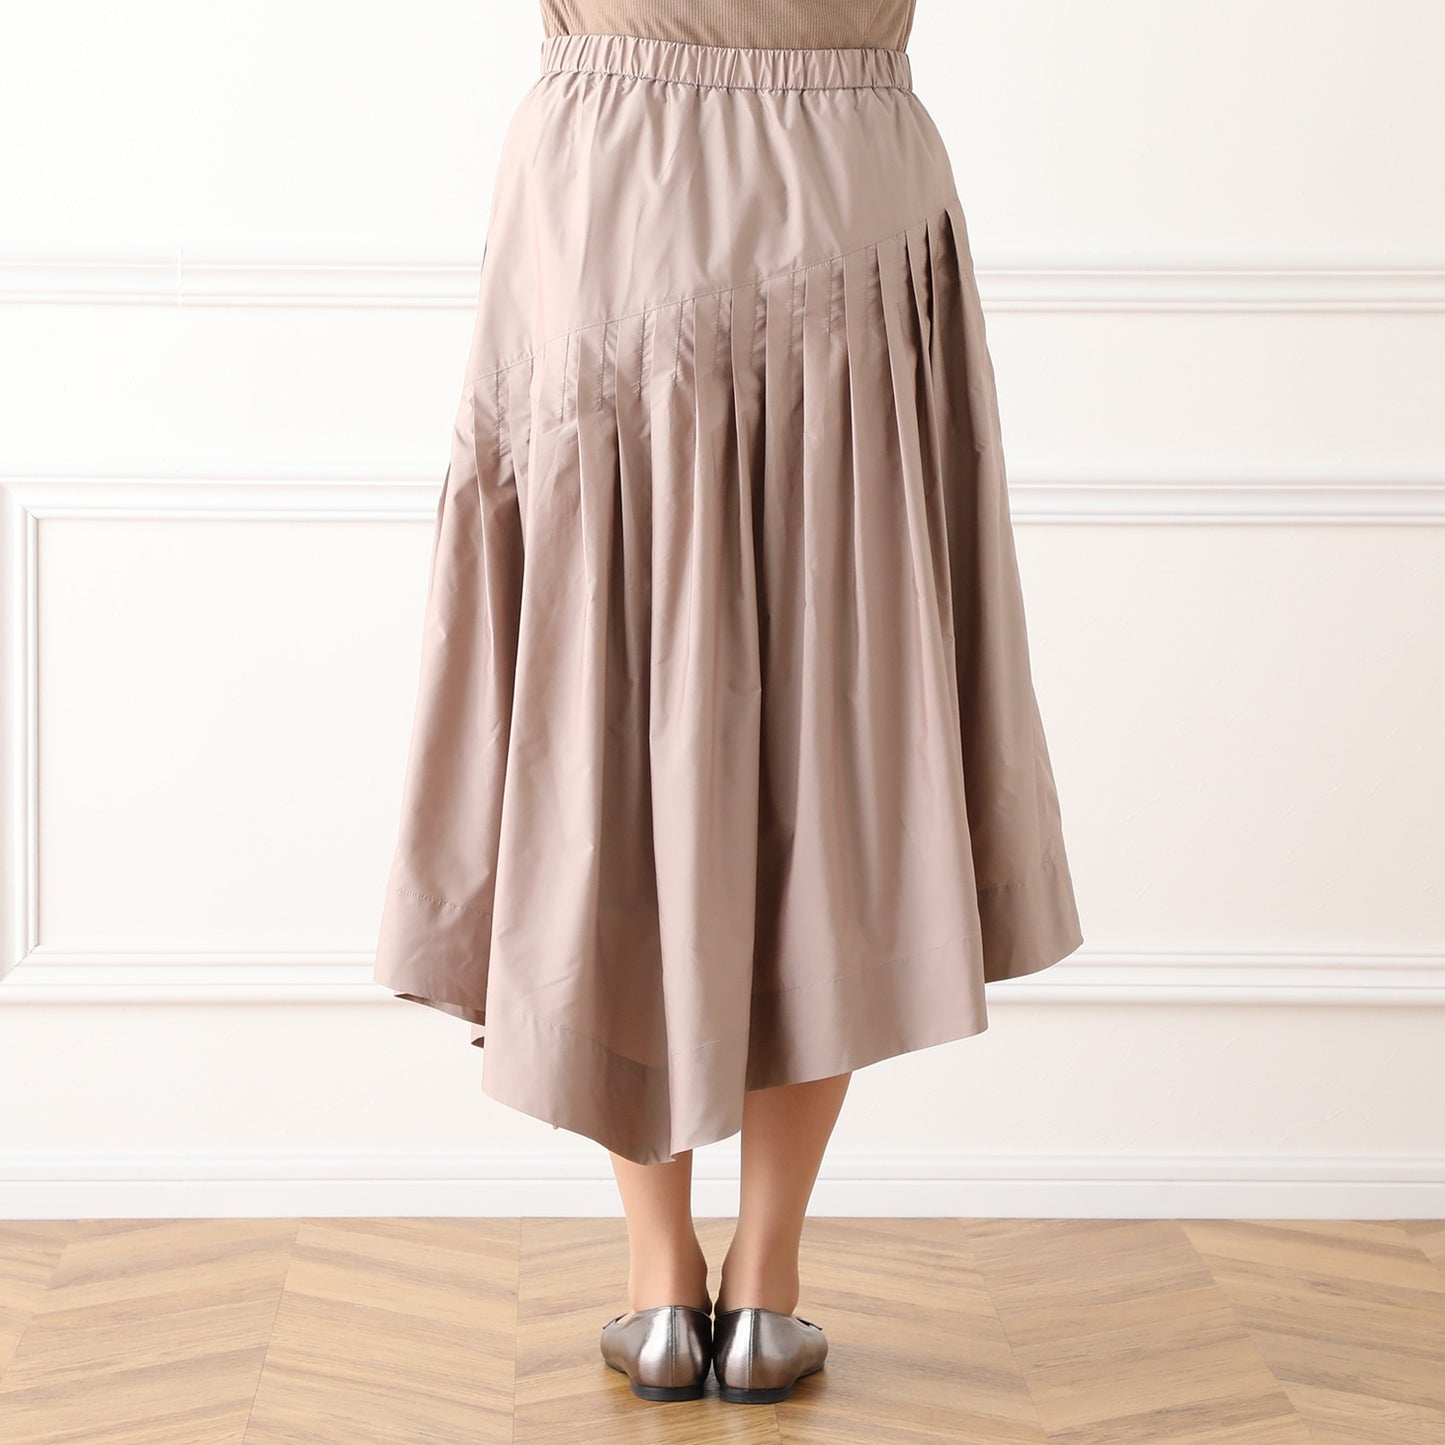 Pintuck Skirt in Blush Beige Taffeta